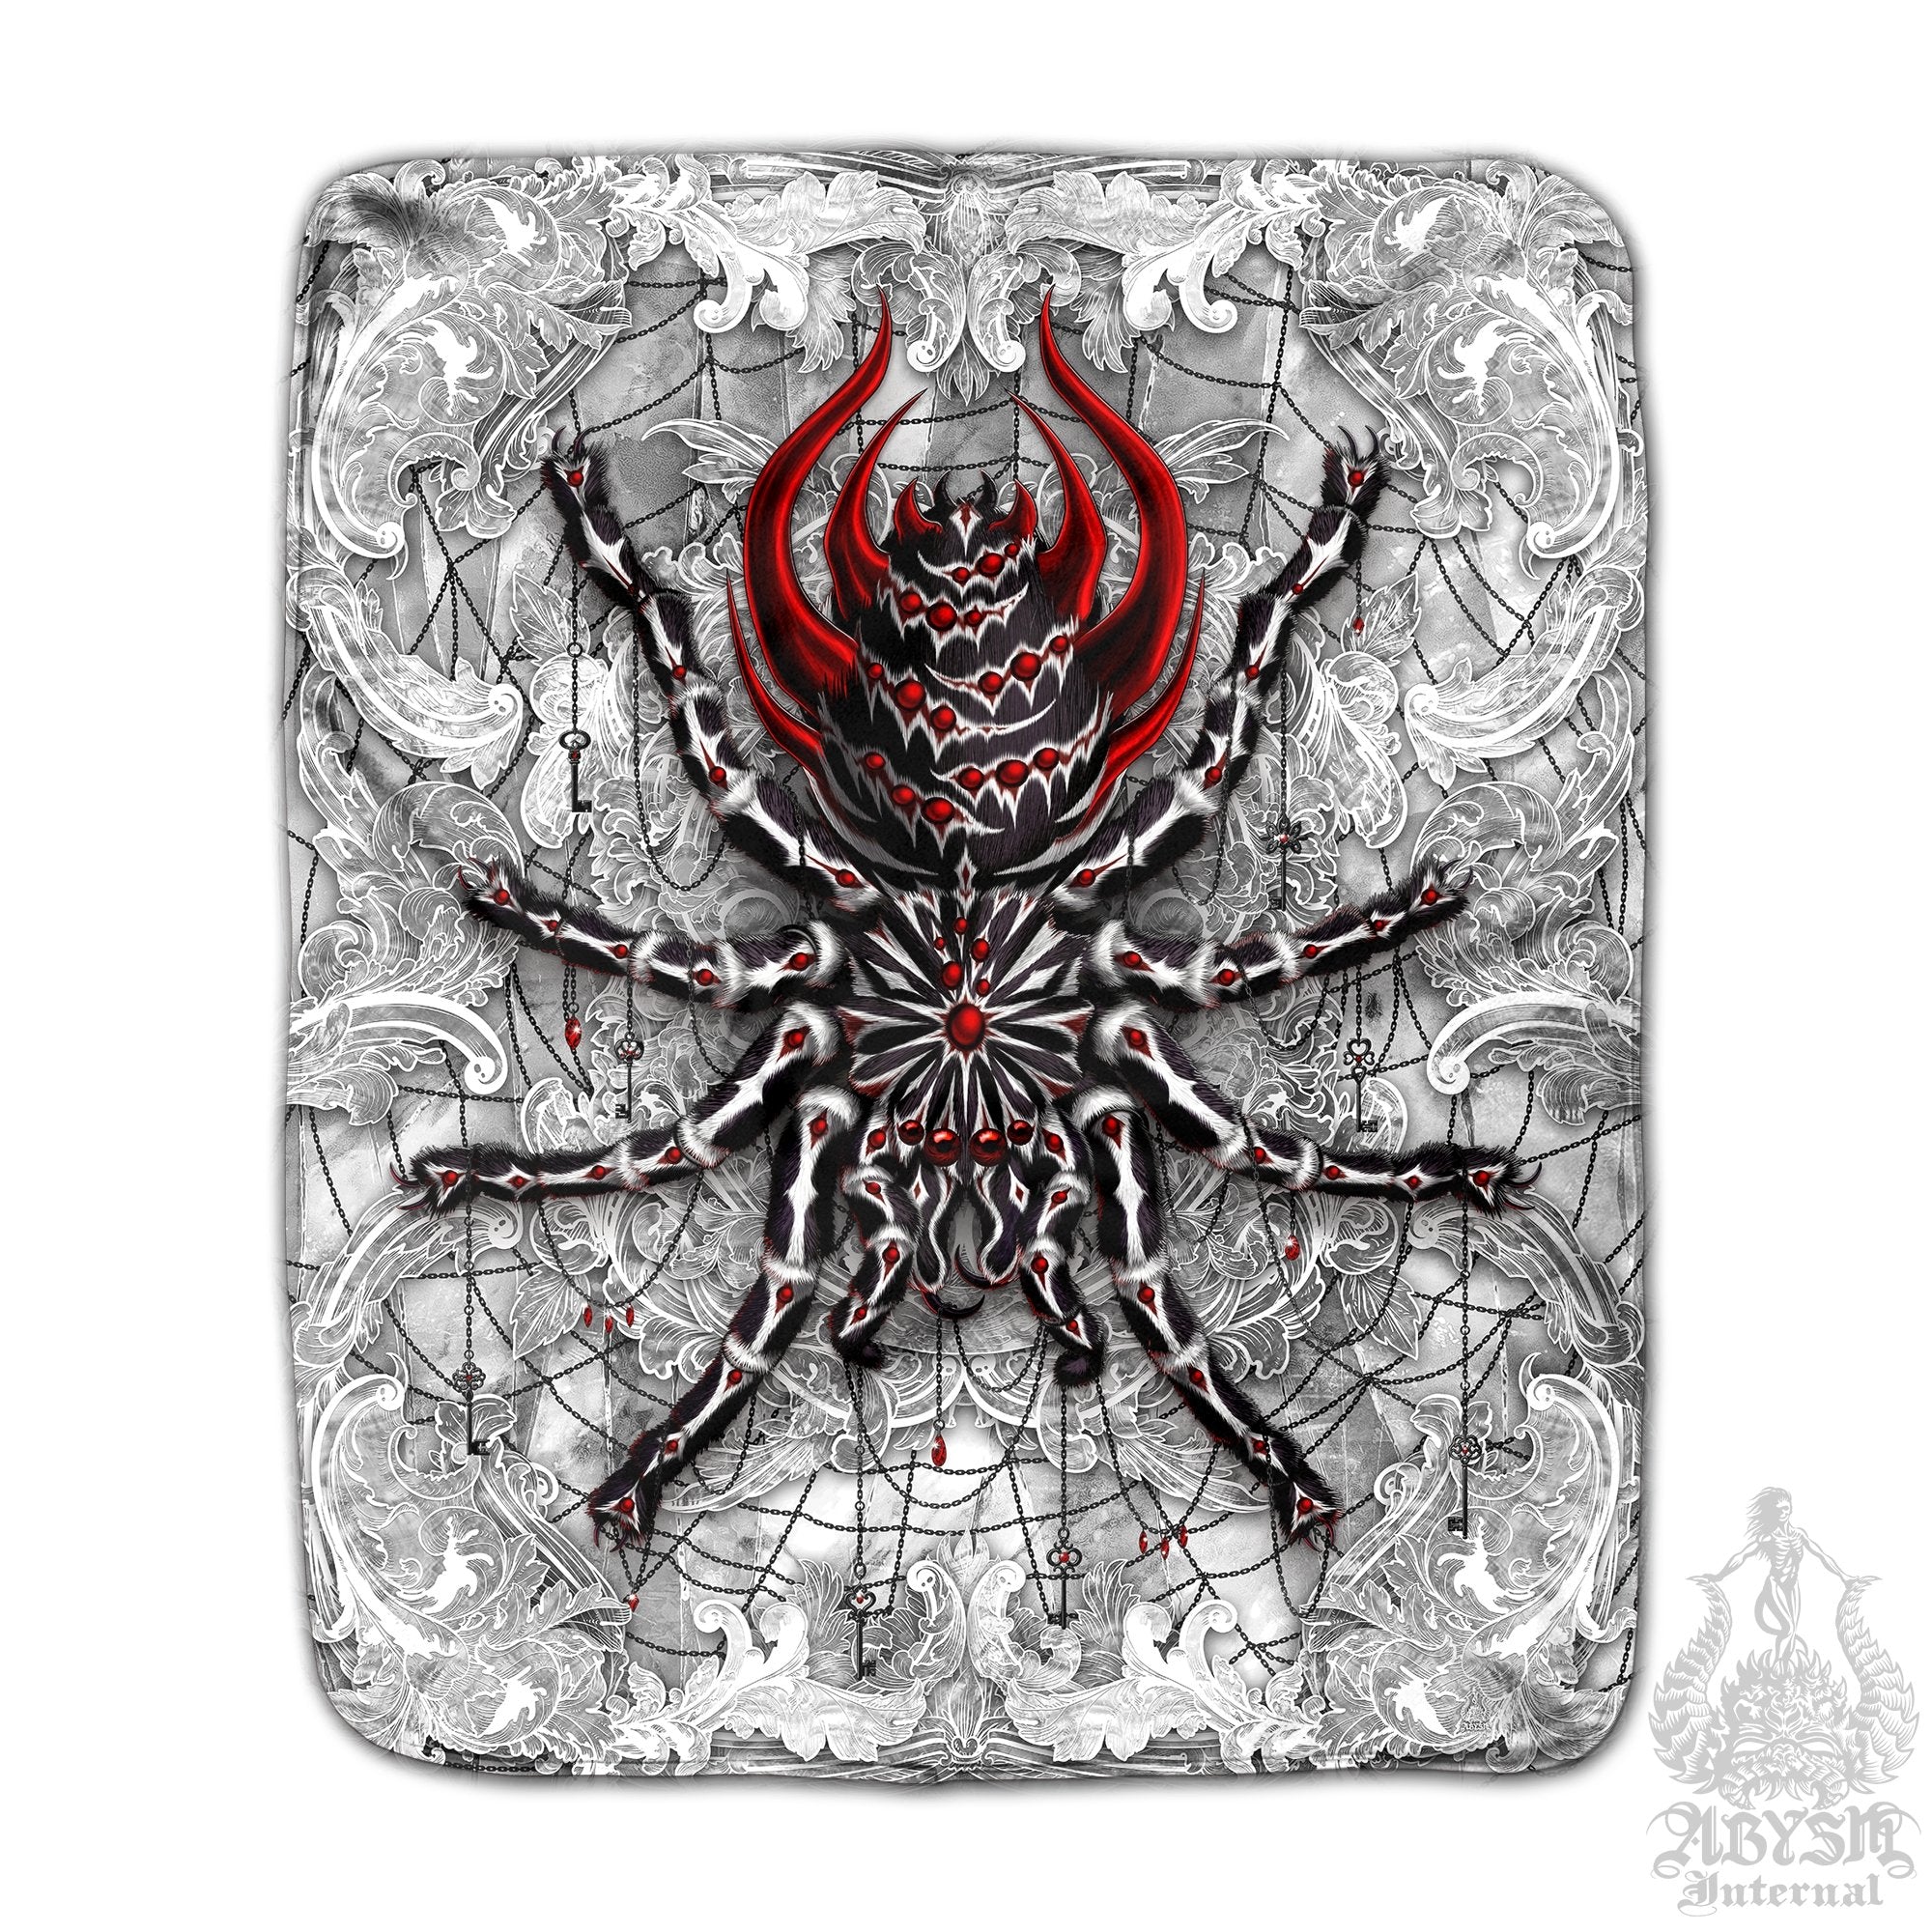 Spider Throw Fleece Blanket, White Goth Home Decor, Gothic Gift, Alternative Art Gift - Stone, Red, Tarantula Art - Abysm Internal